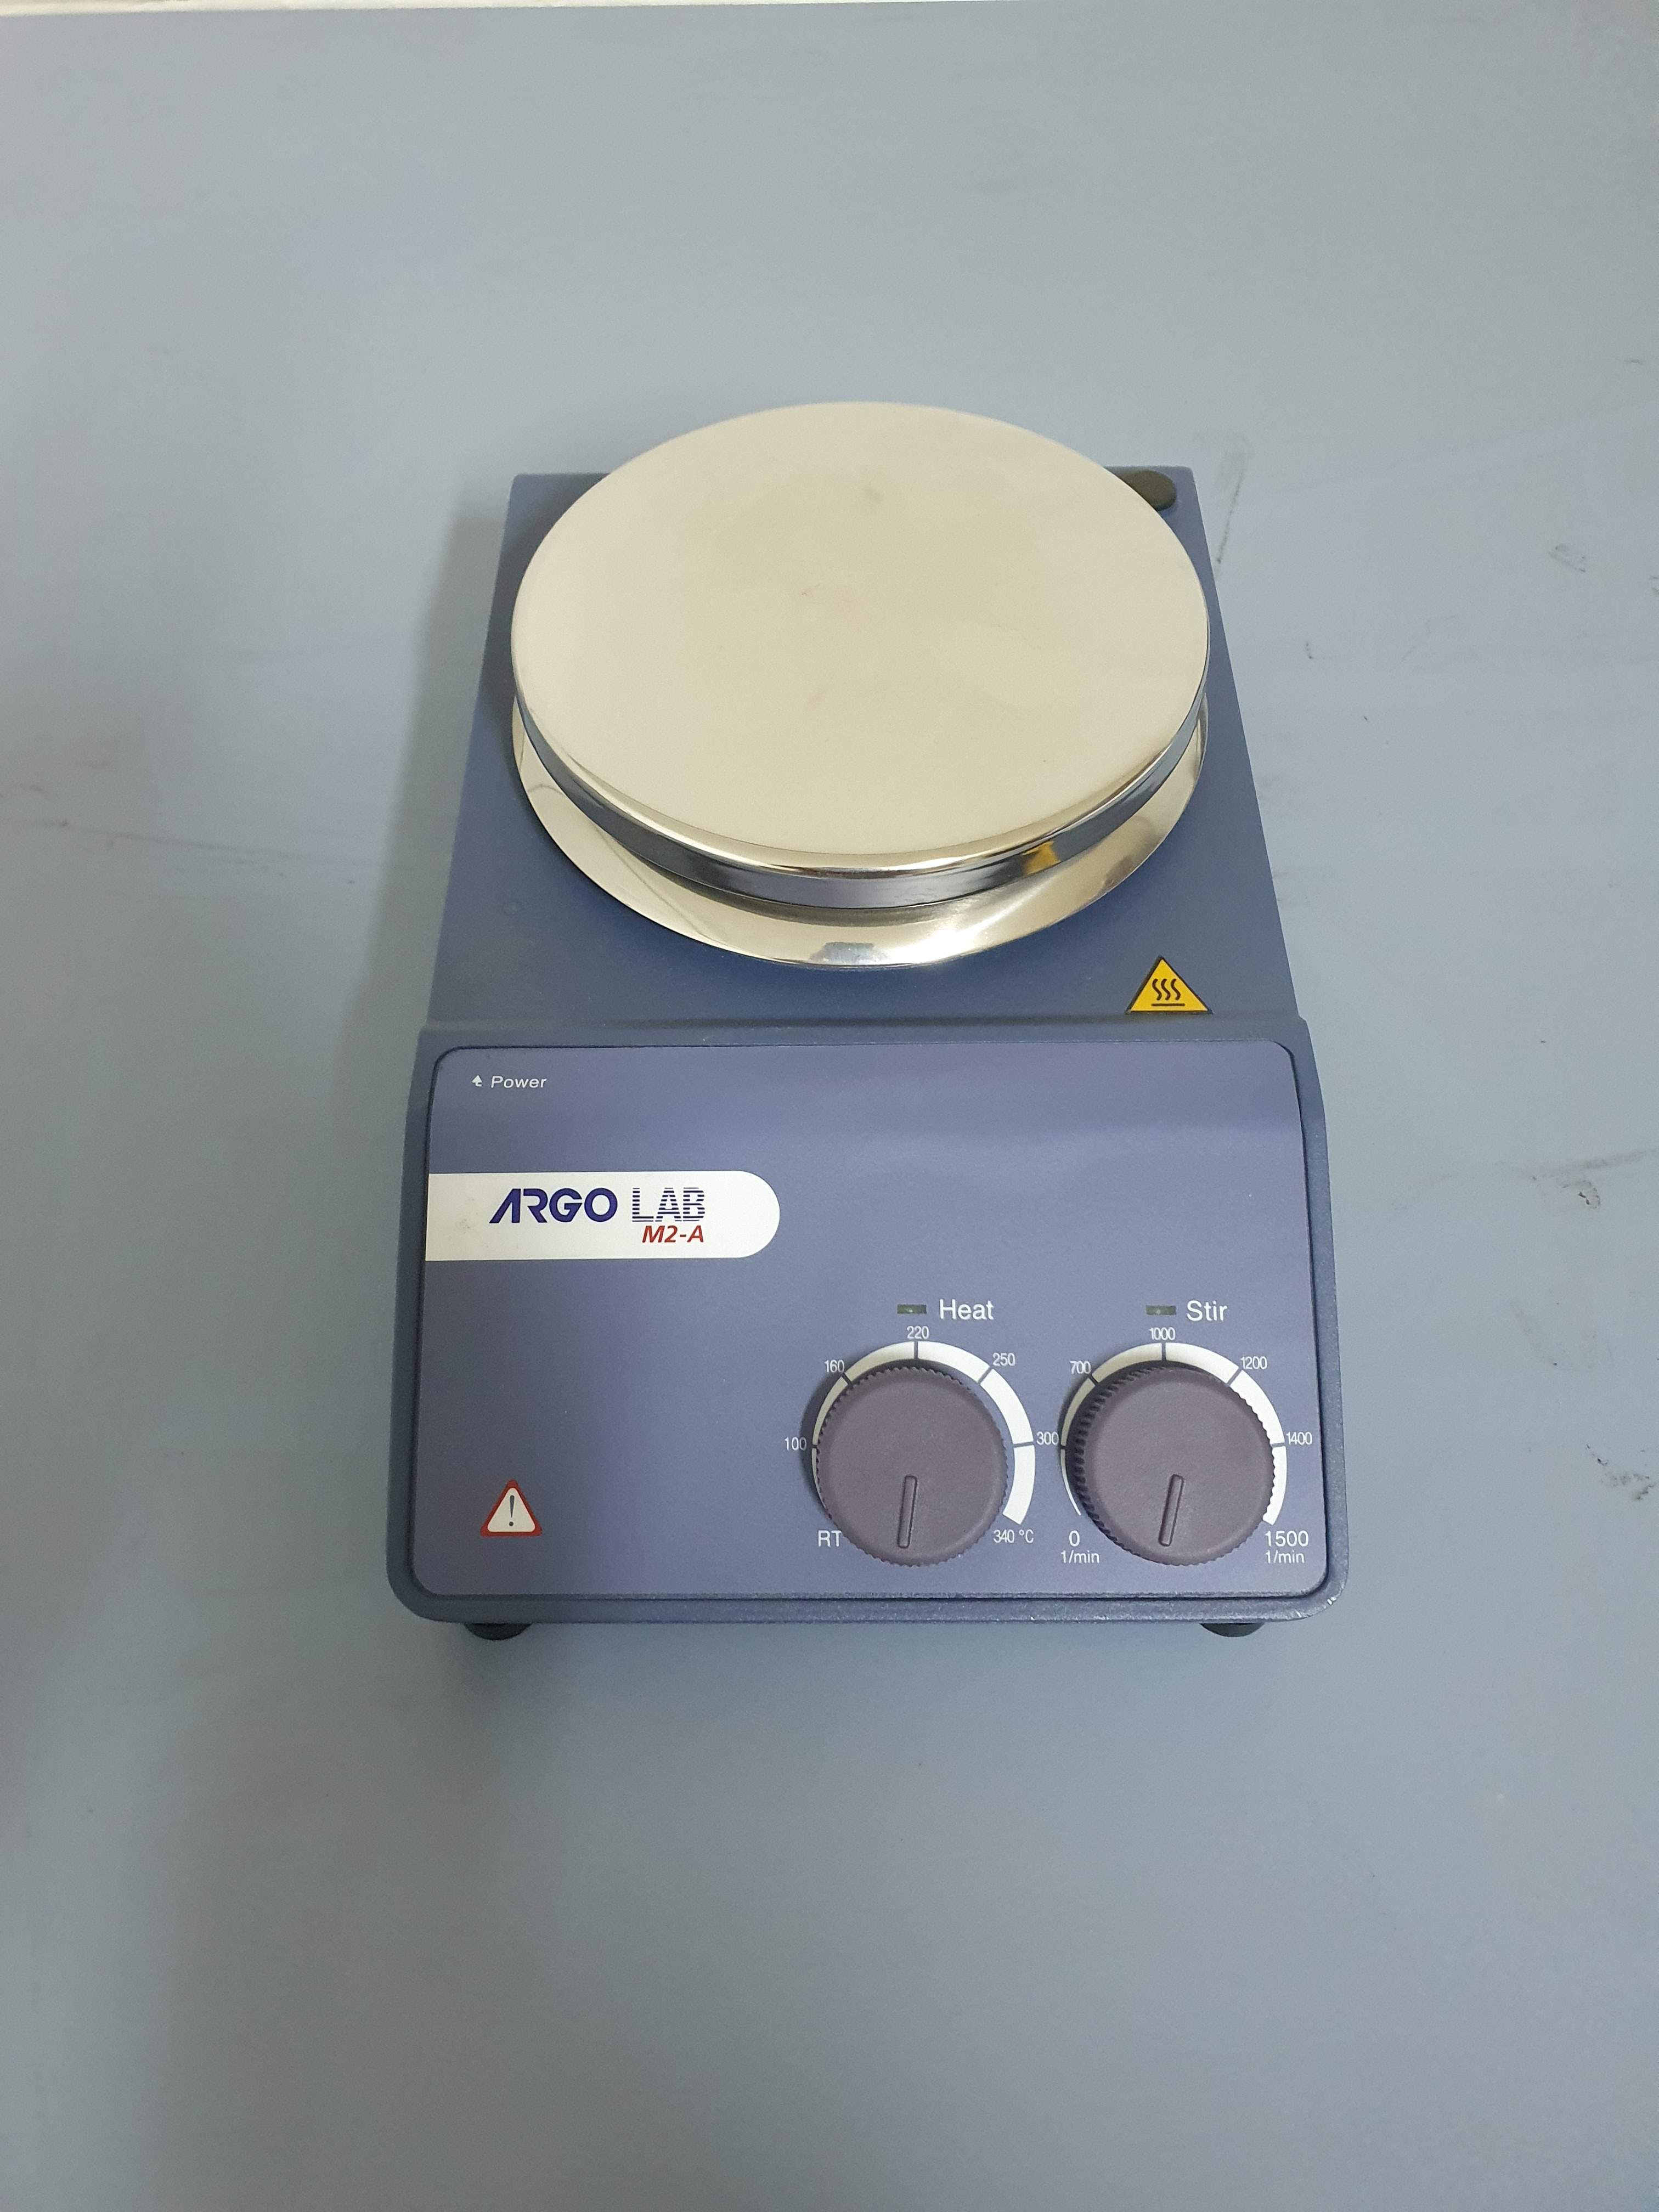 Agitatore magnetico Argo Lab M2-A in vendita - foto 1